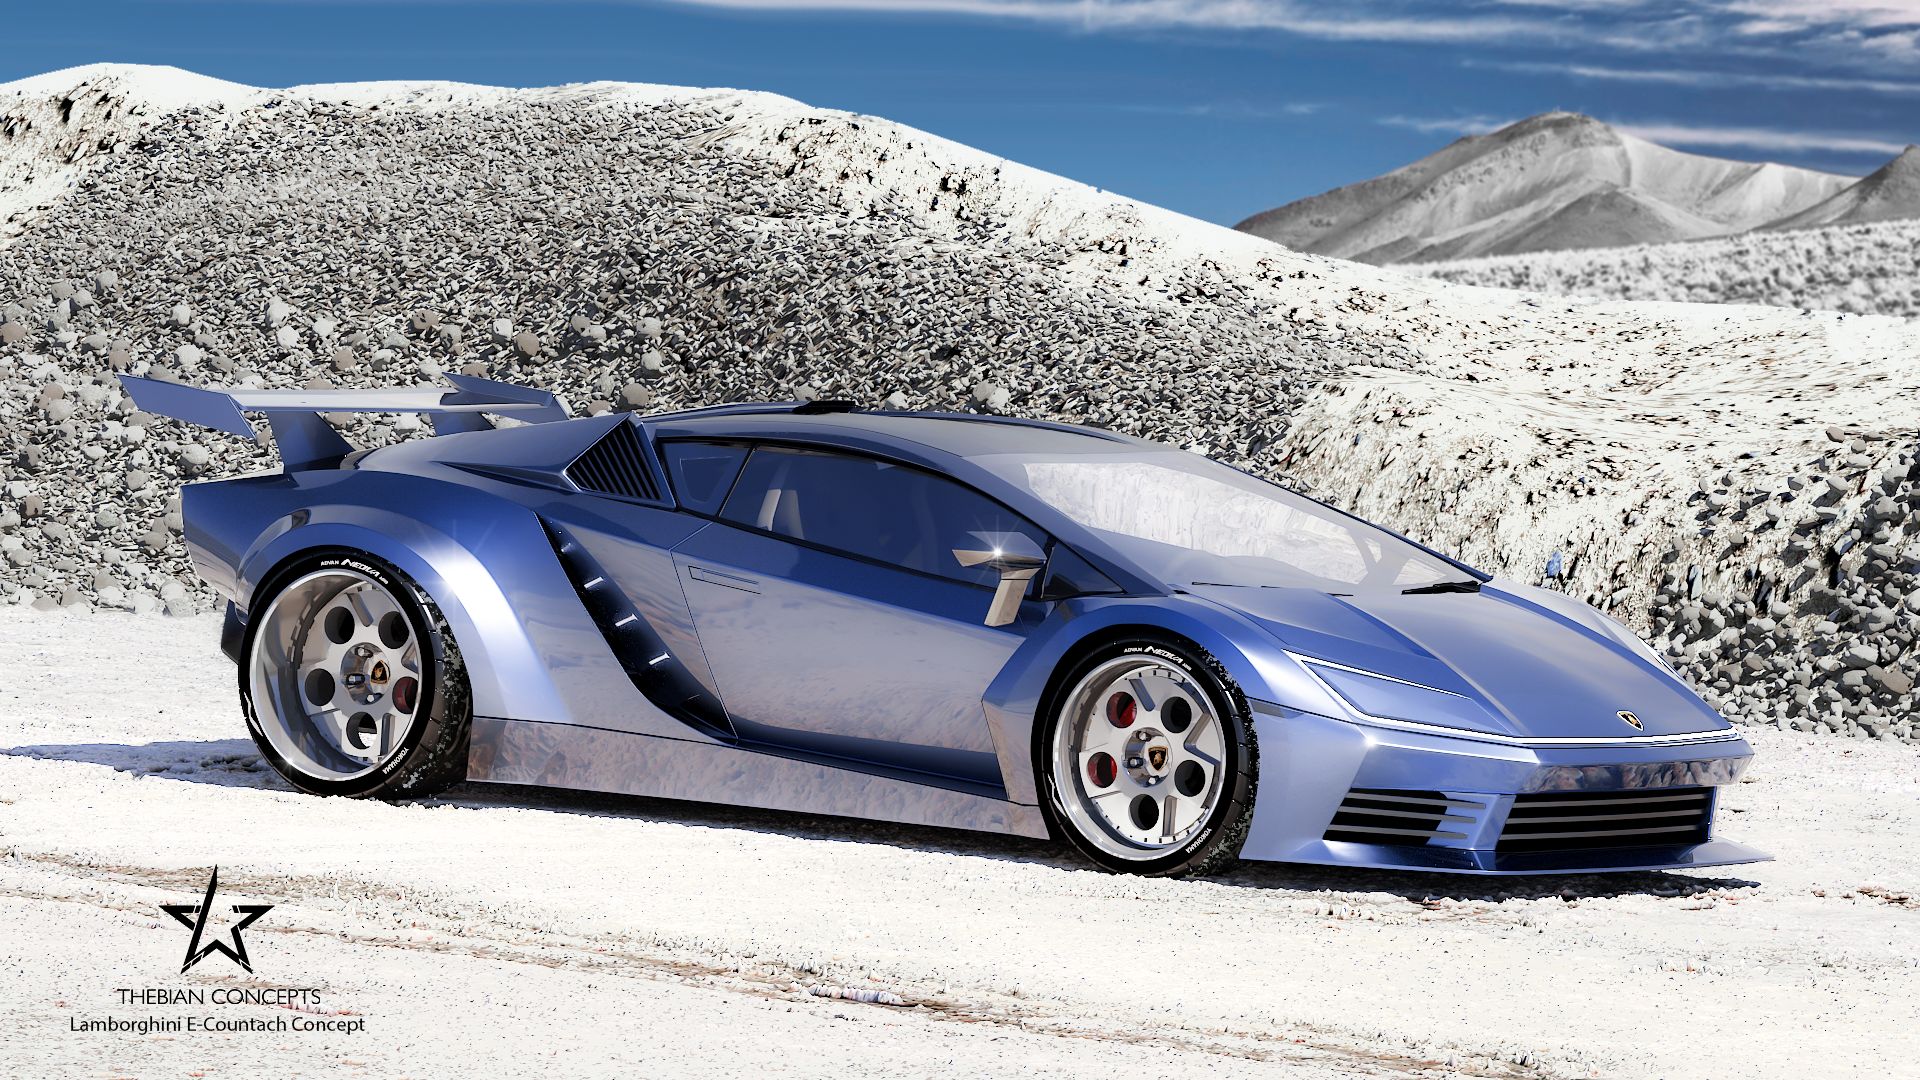 Laden Sie das Lamborghini, Lamborghini Countach, Fahrzeuge-Bild kostenlos auf Ihren PC-Desktop herunter